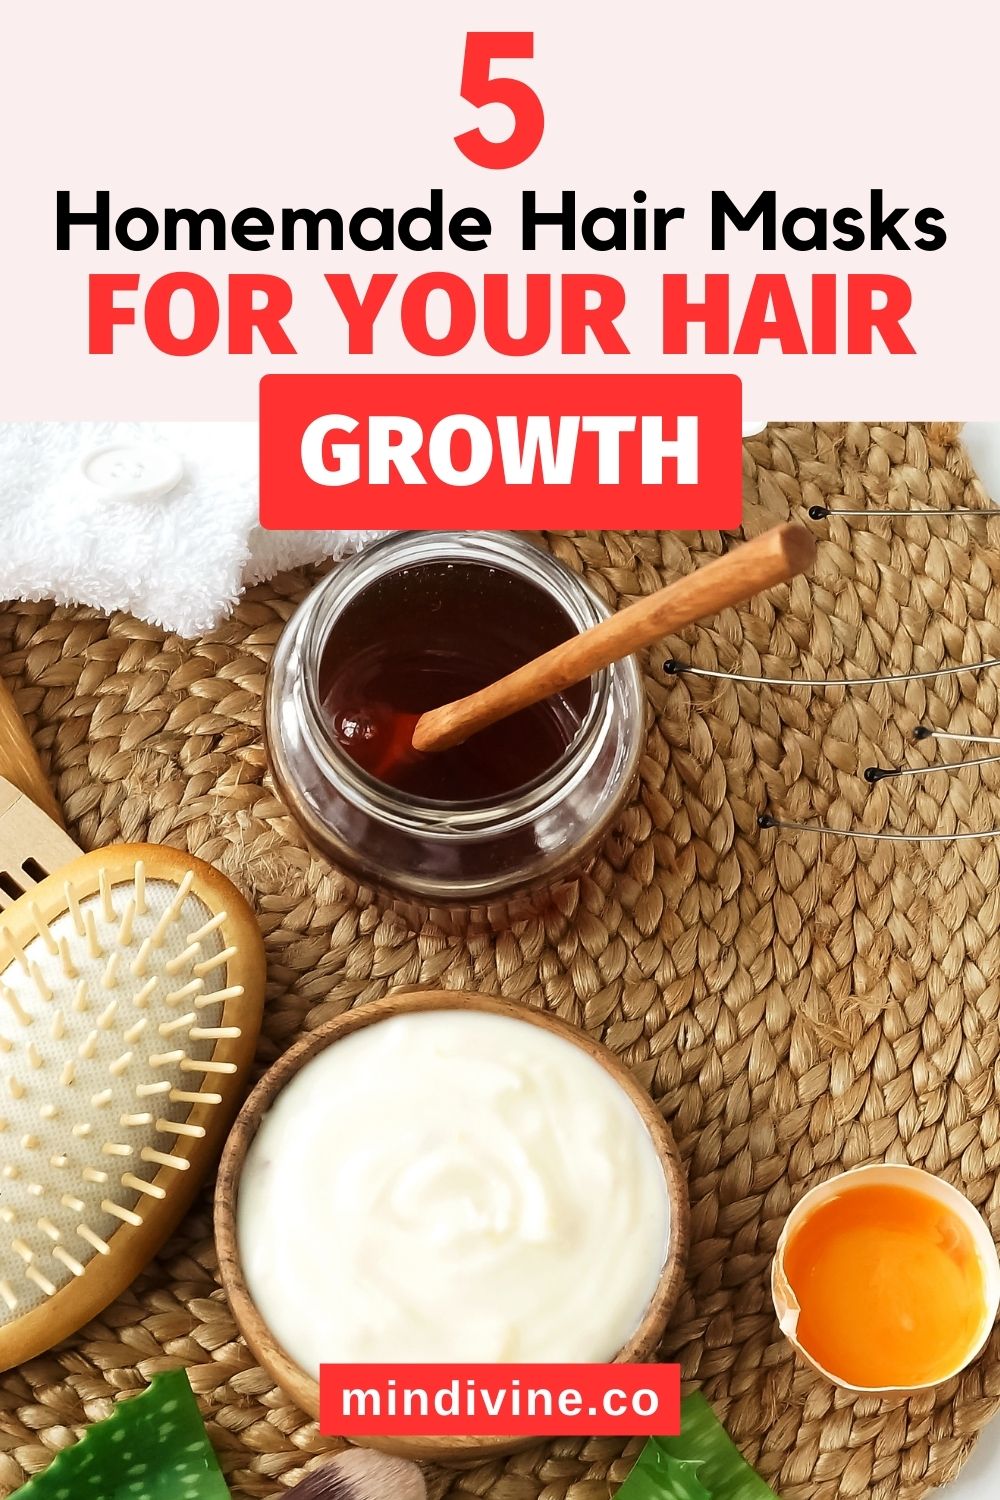 Pinterest pin: Homemade hair mask and ingredients for hair growth: honey, egg, yogurt, aloe on white background.